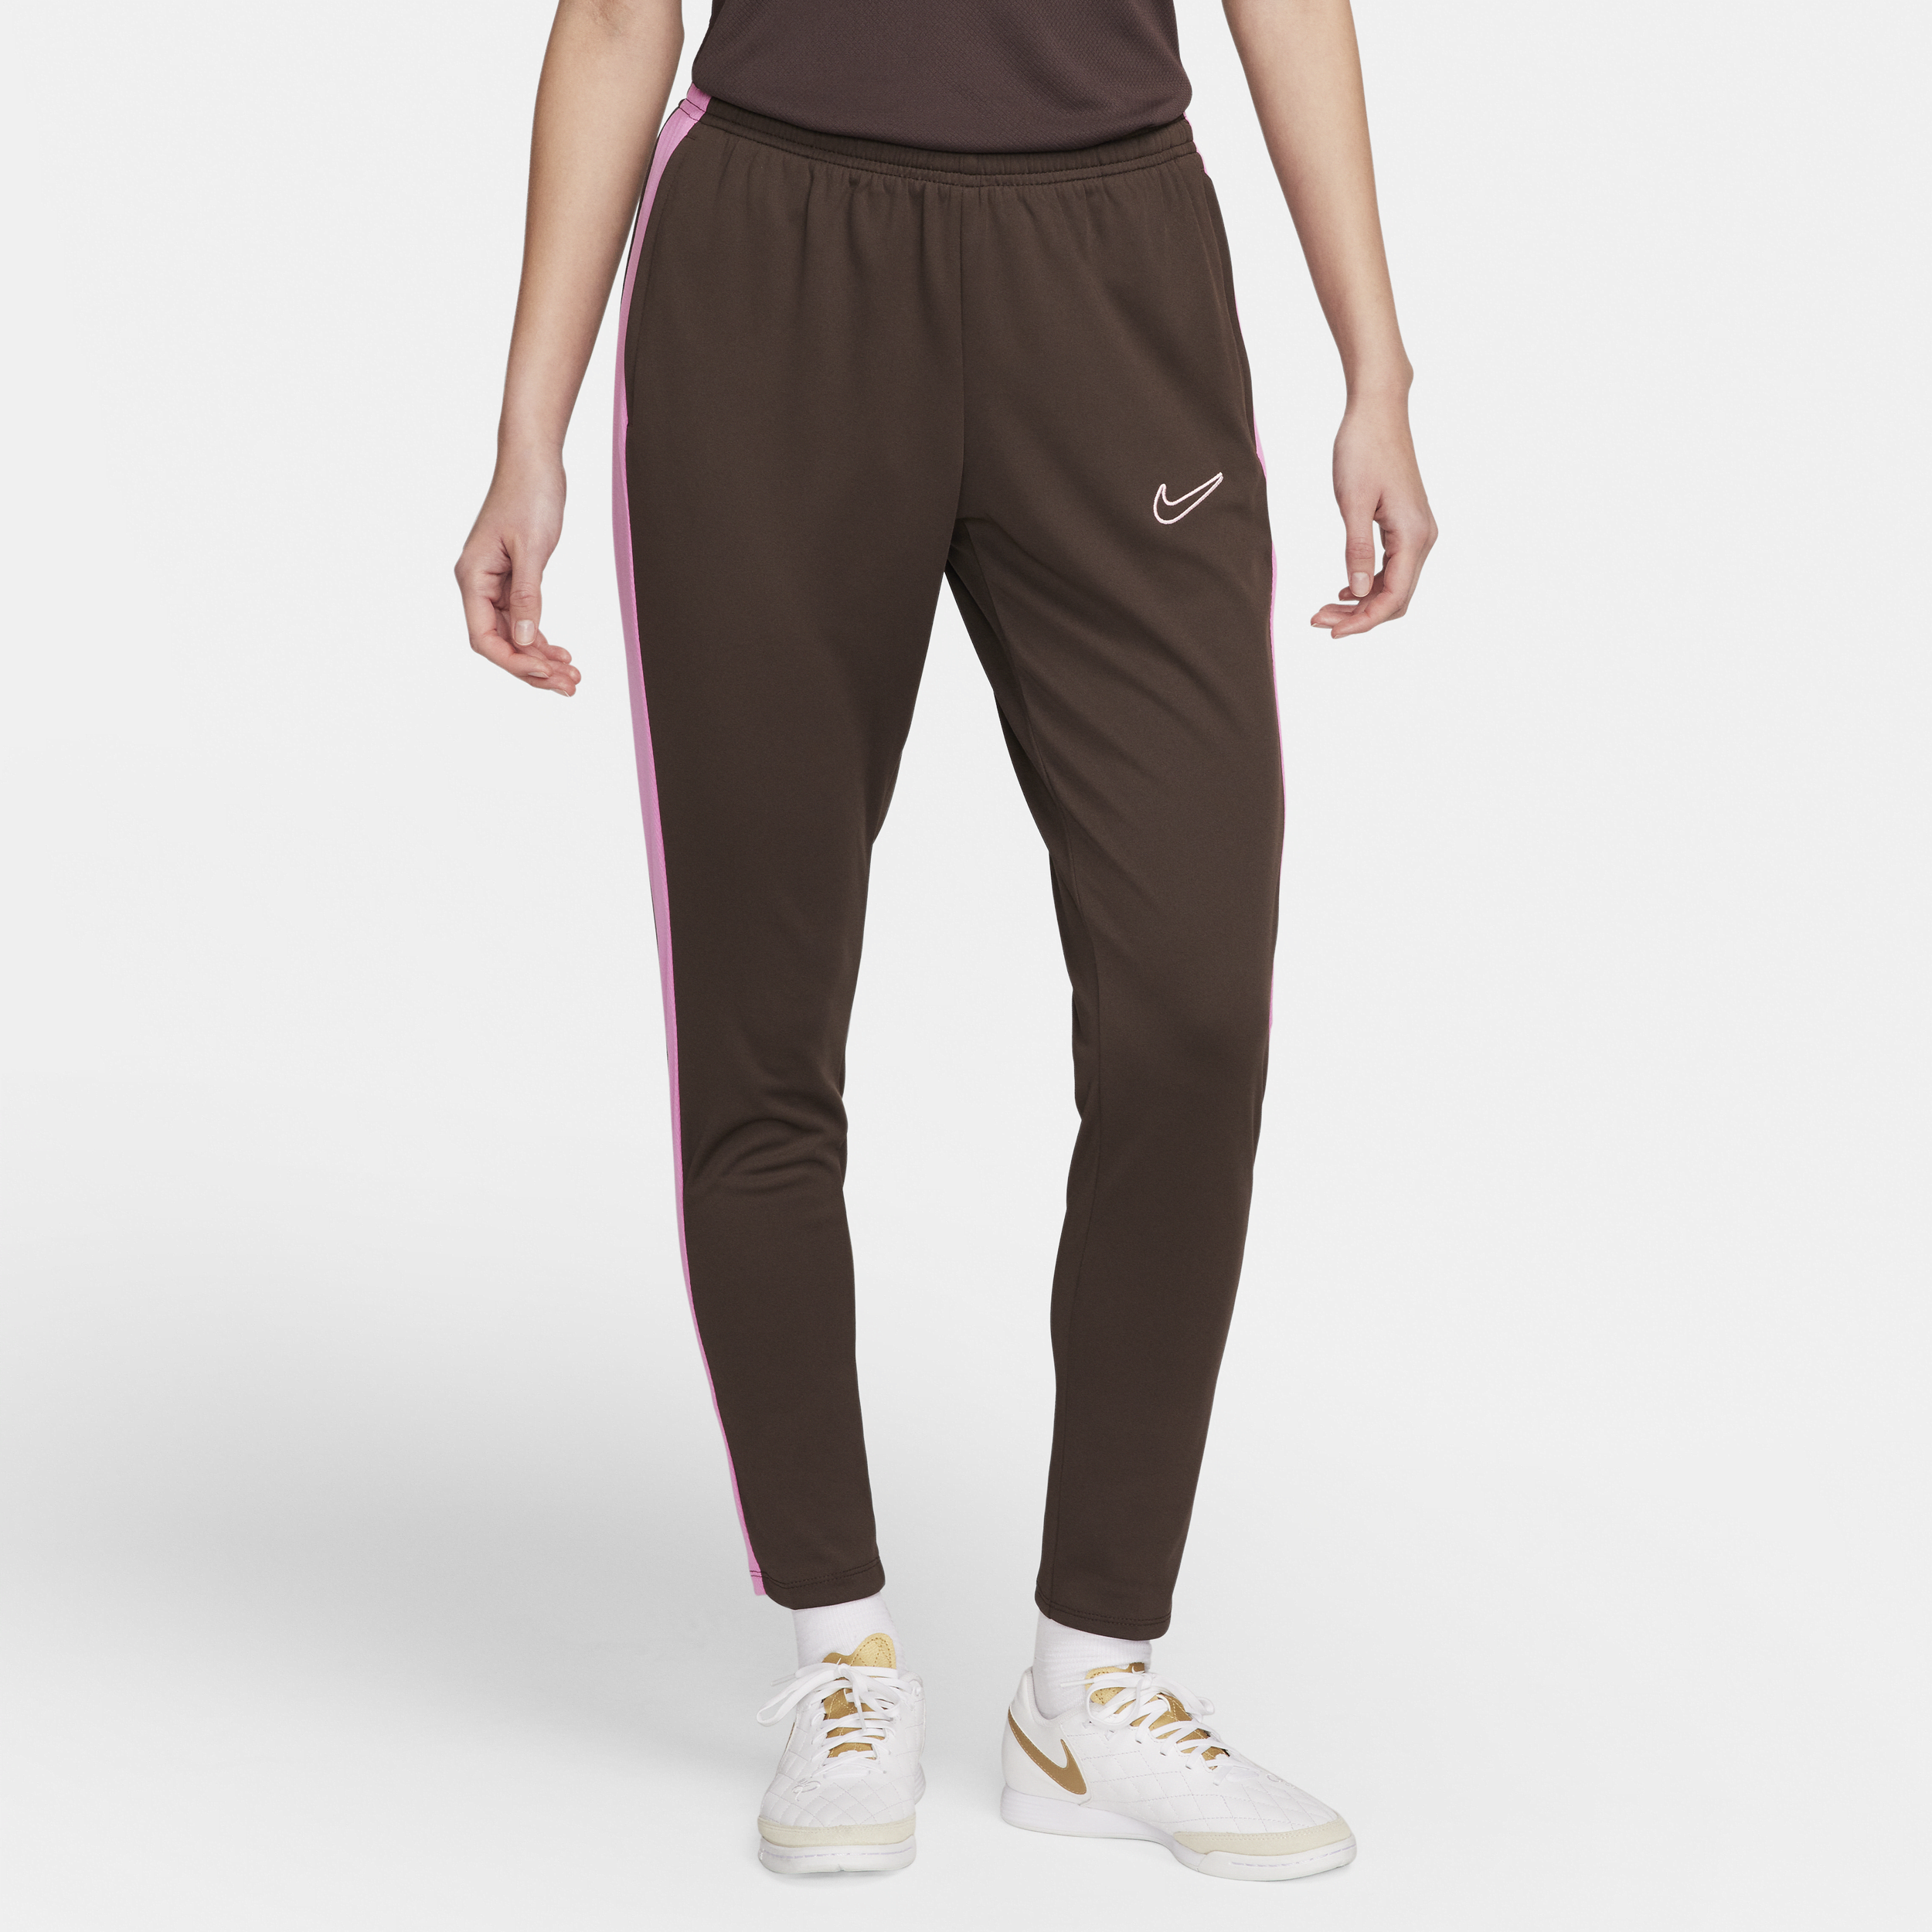 Nike Women's Dri-fit Academy Soccer Pants In Brown